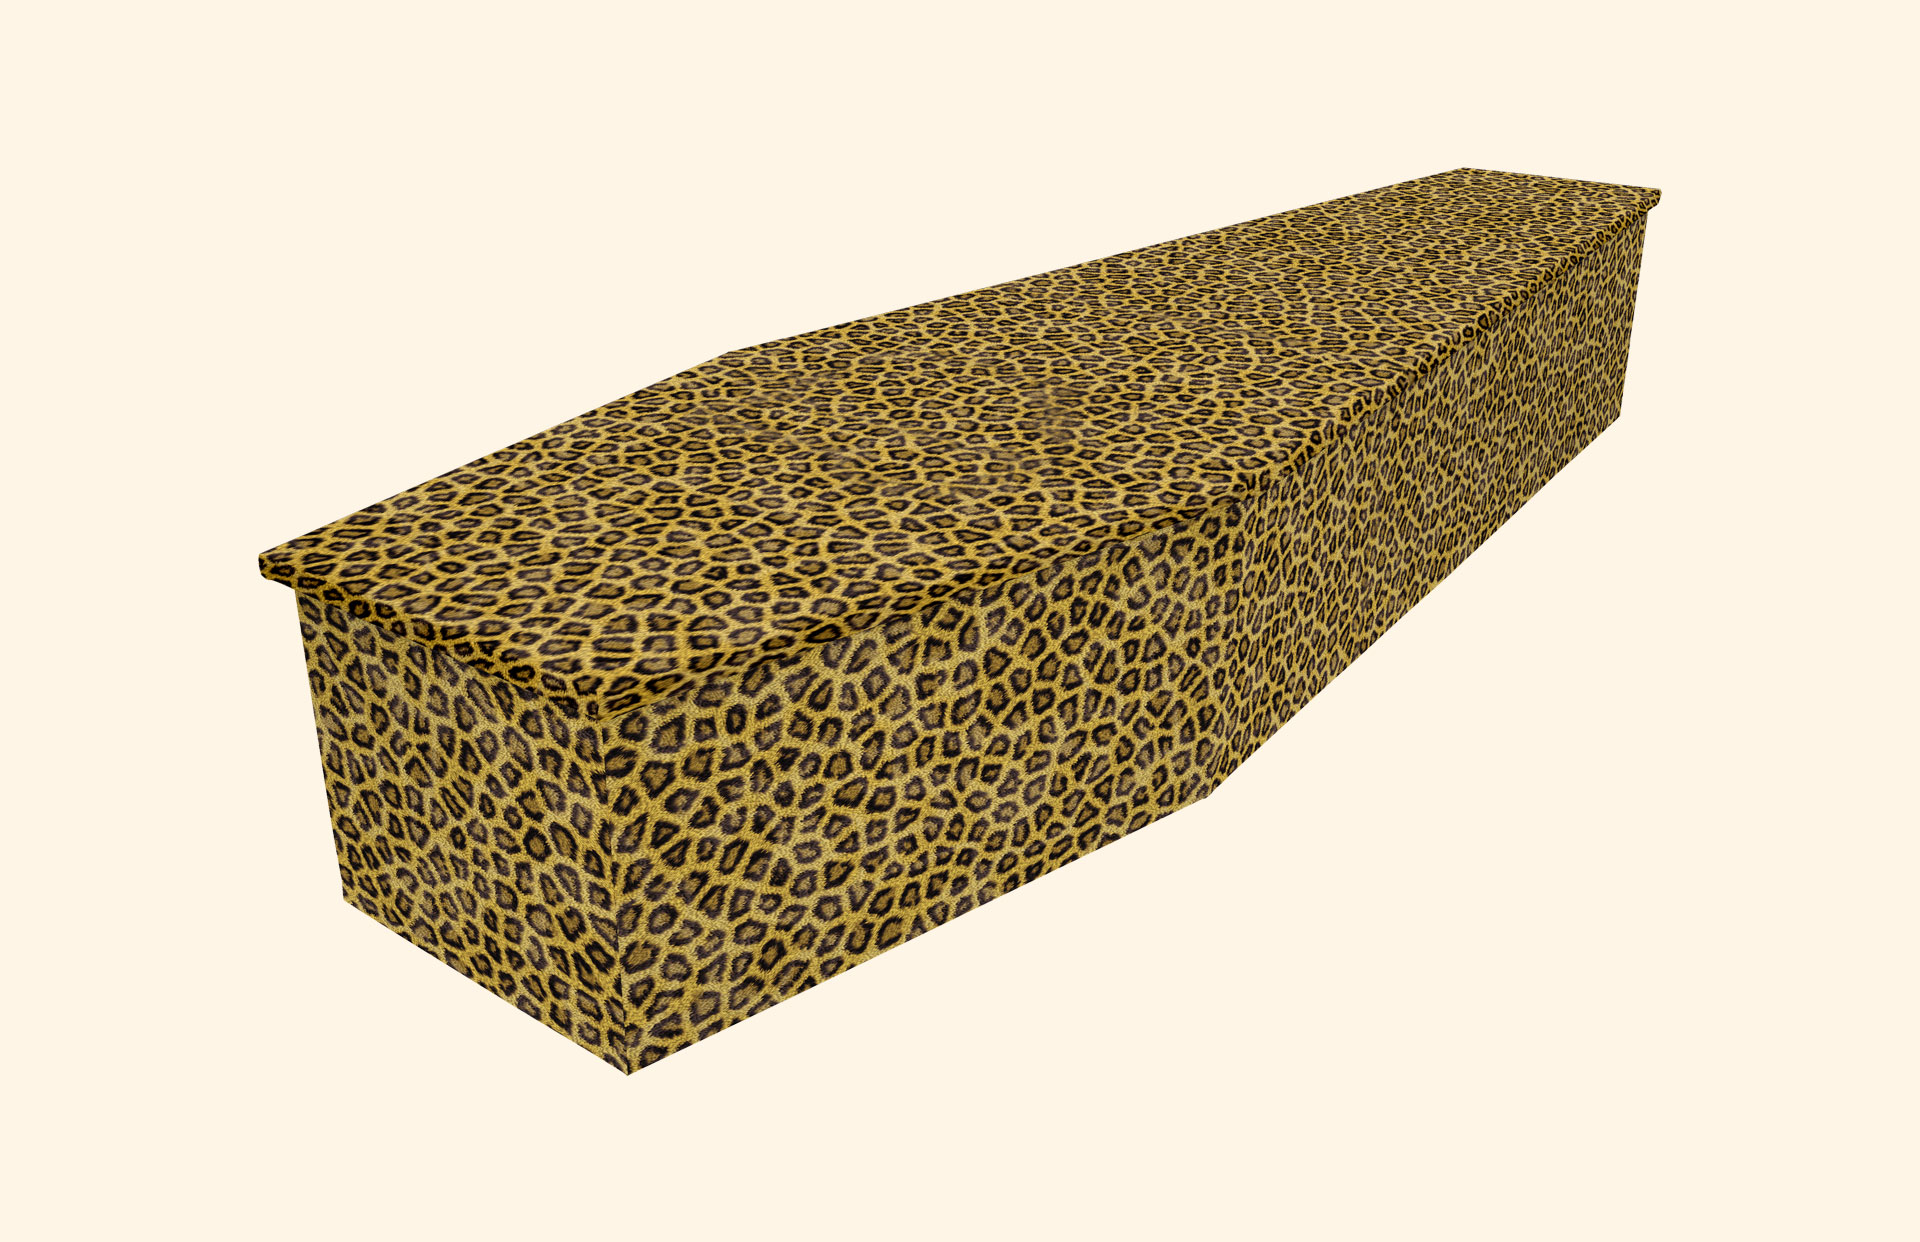 Leopard Skin design on a cardboard coffin